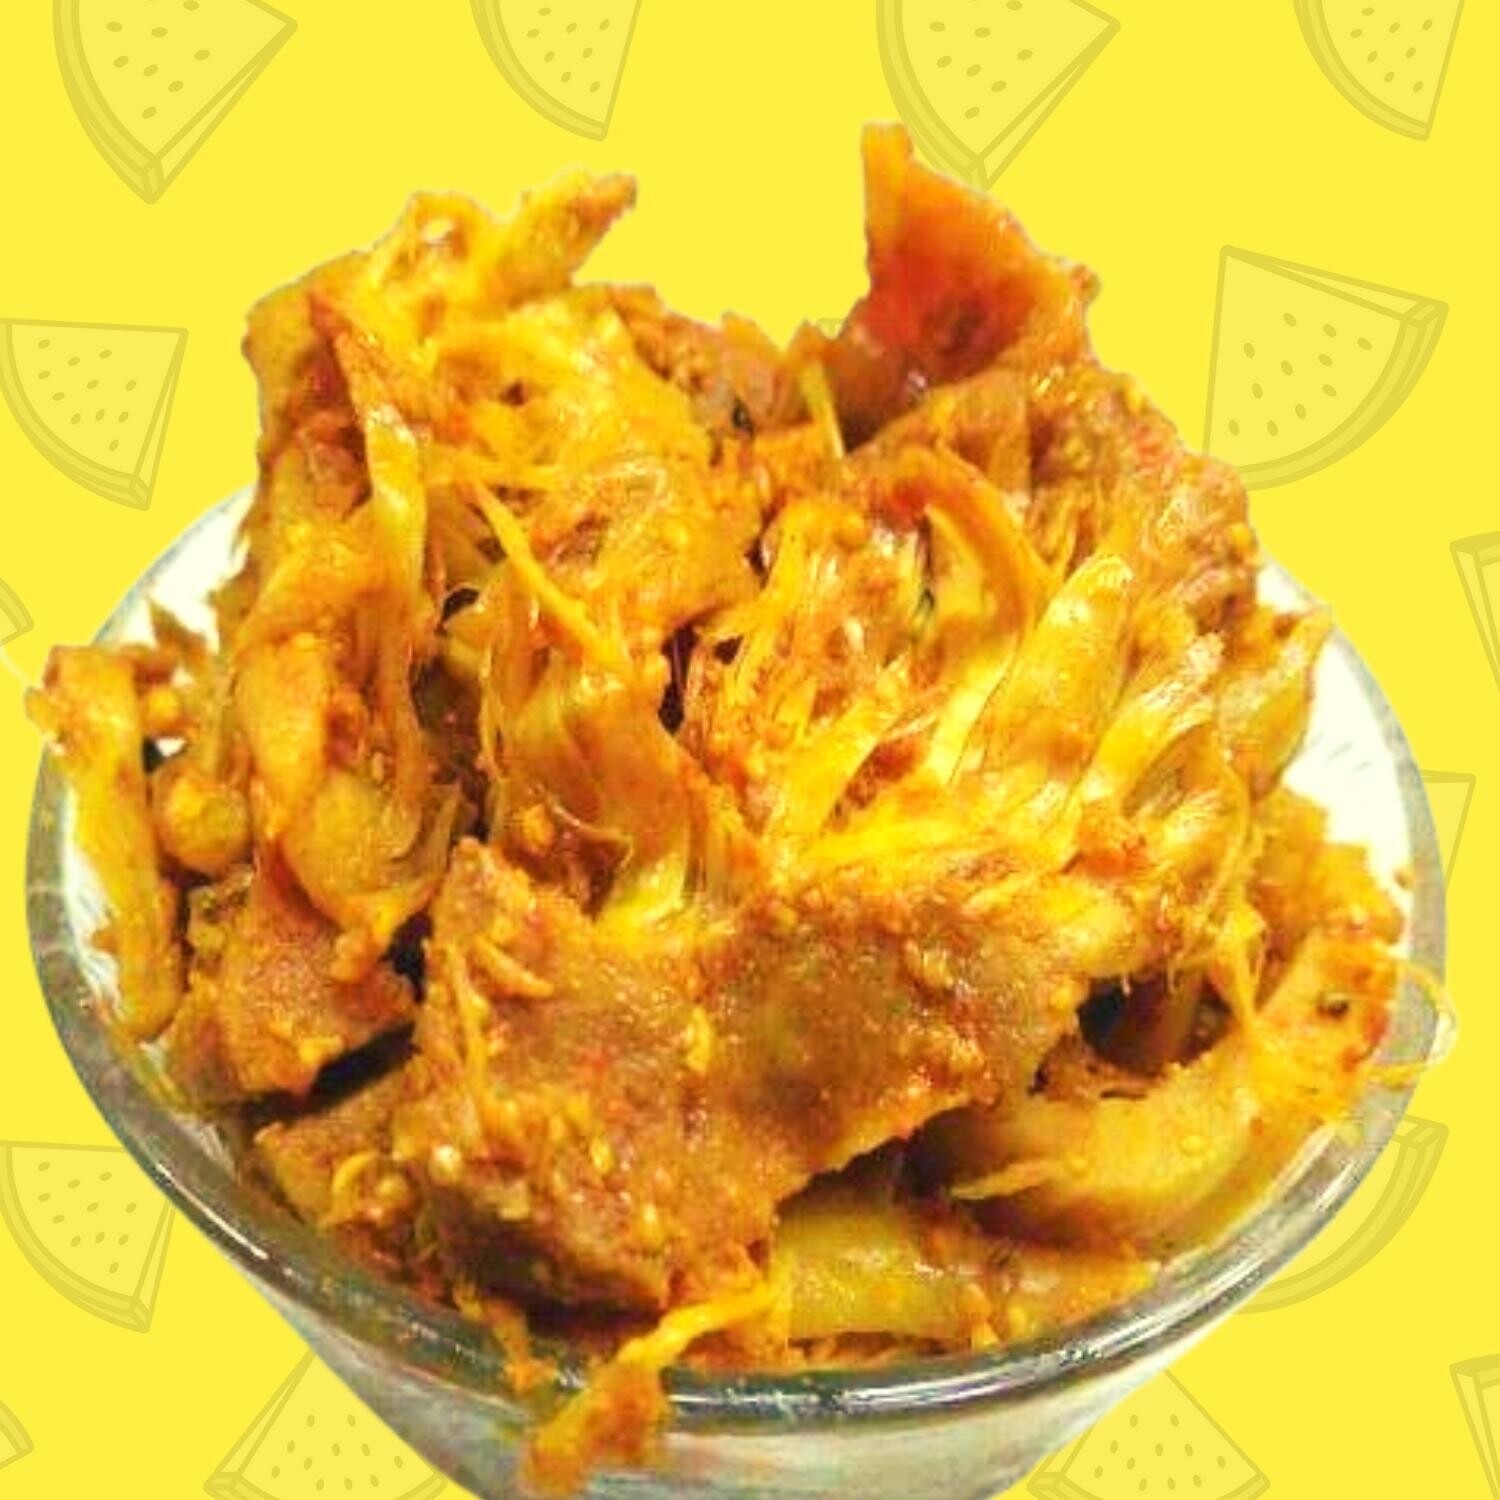 Banarasi Jackfruit Pickle | Kathal ka Achar | Spiced Jackfruit Pickle | Original Home Made Taste with Mustard Oil | Pantry Must Have | 400GM | Pack of 1